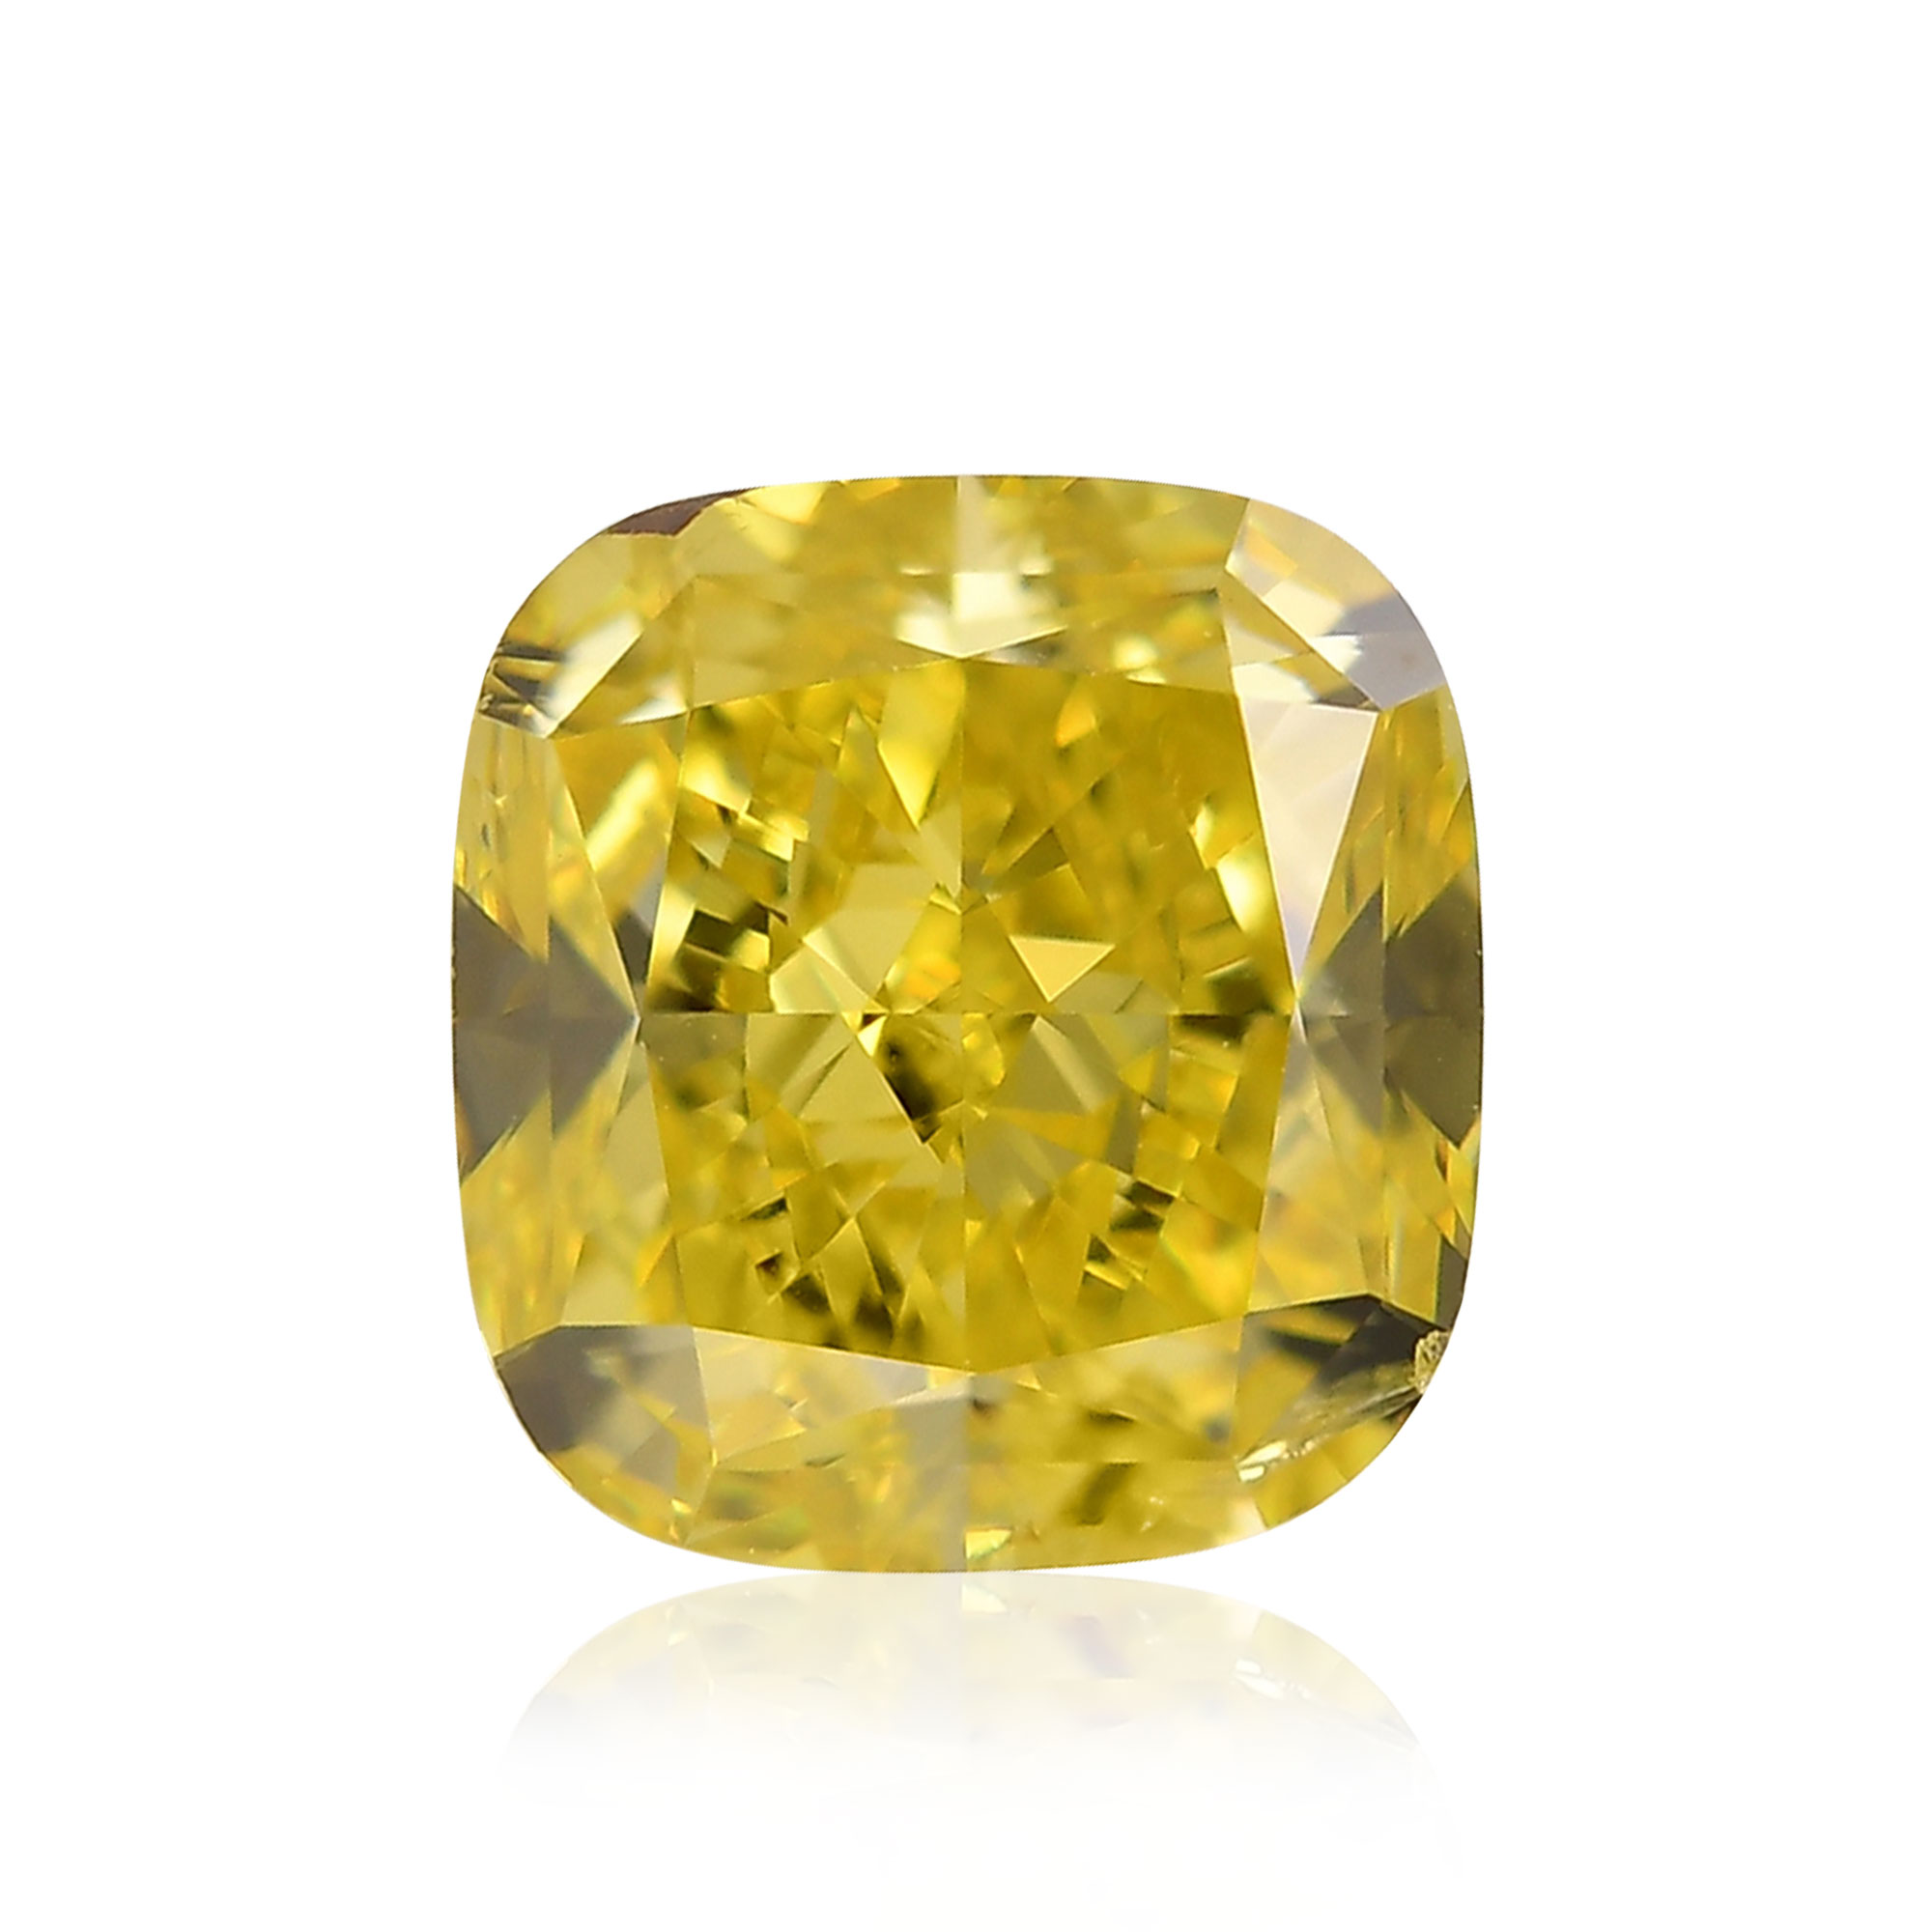 3.00 carat, Fancy Vivid Yellow Diamond, Cushion Shape, SI2 Clarity, GIA,  SKU 426189